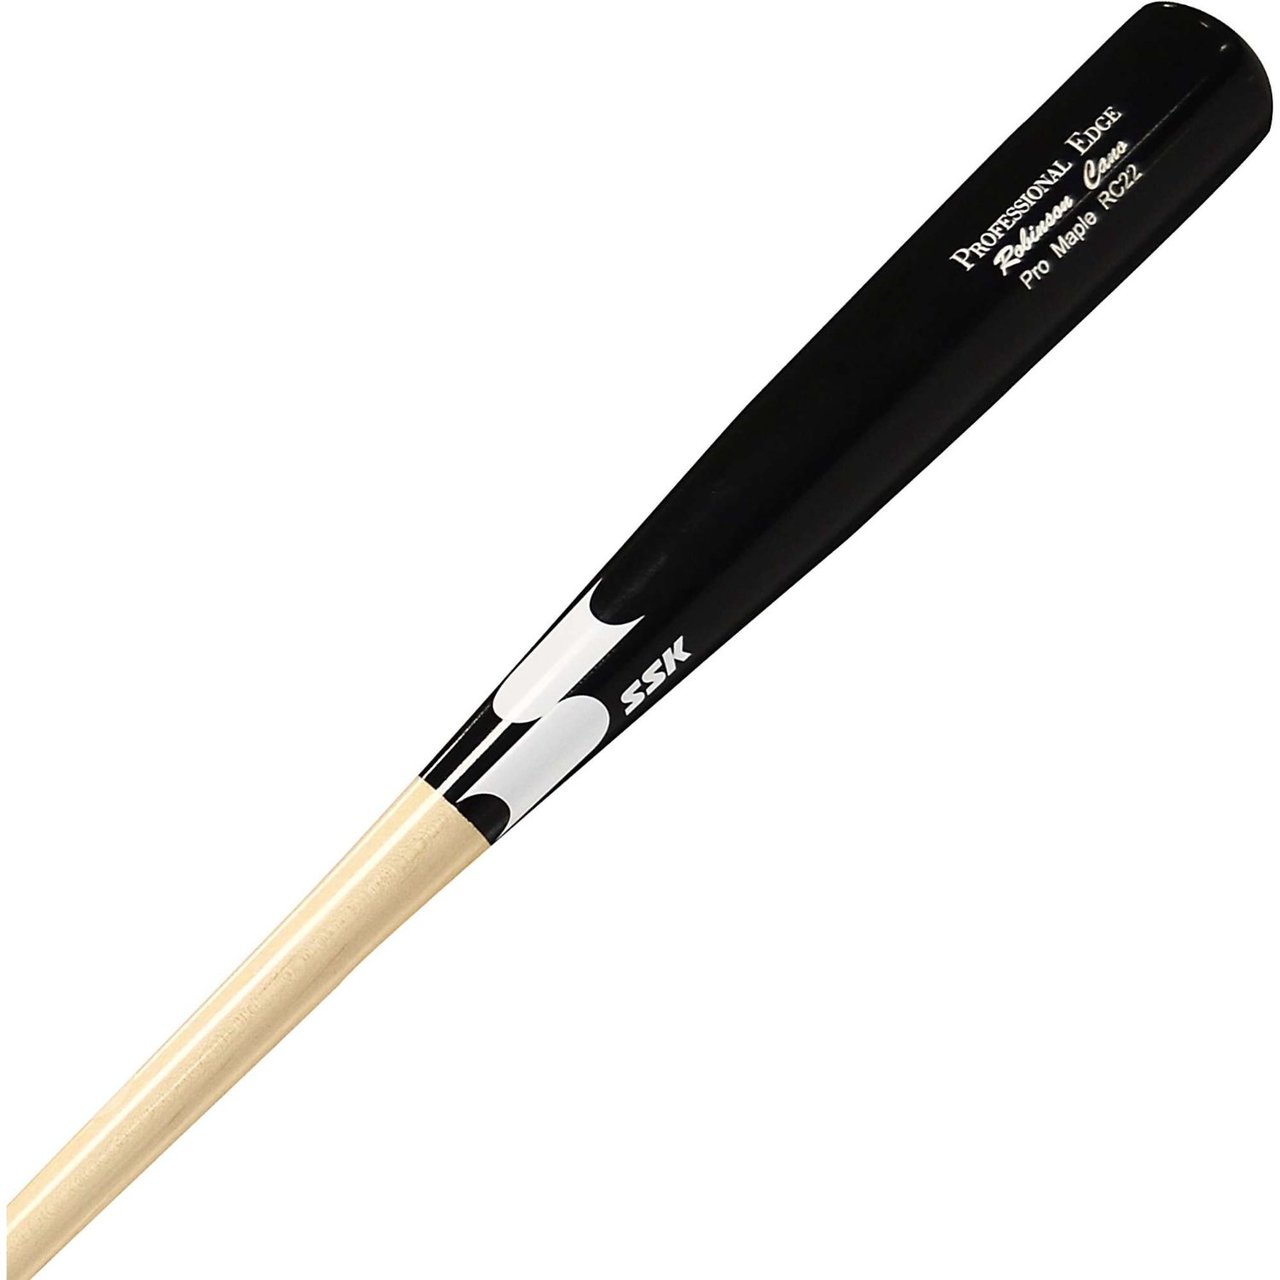 ssk-wood-baseball-bat-maple-rc-22-black-barrel-nat-handle-32-inch SM-RC22-BN-32 SSK 083351450601 The SSK RC22 32 inch Professional Edge maple wood bat from